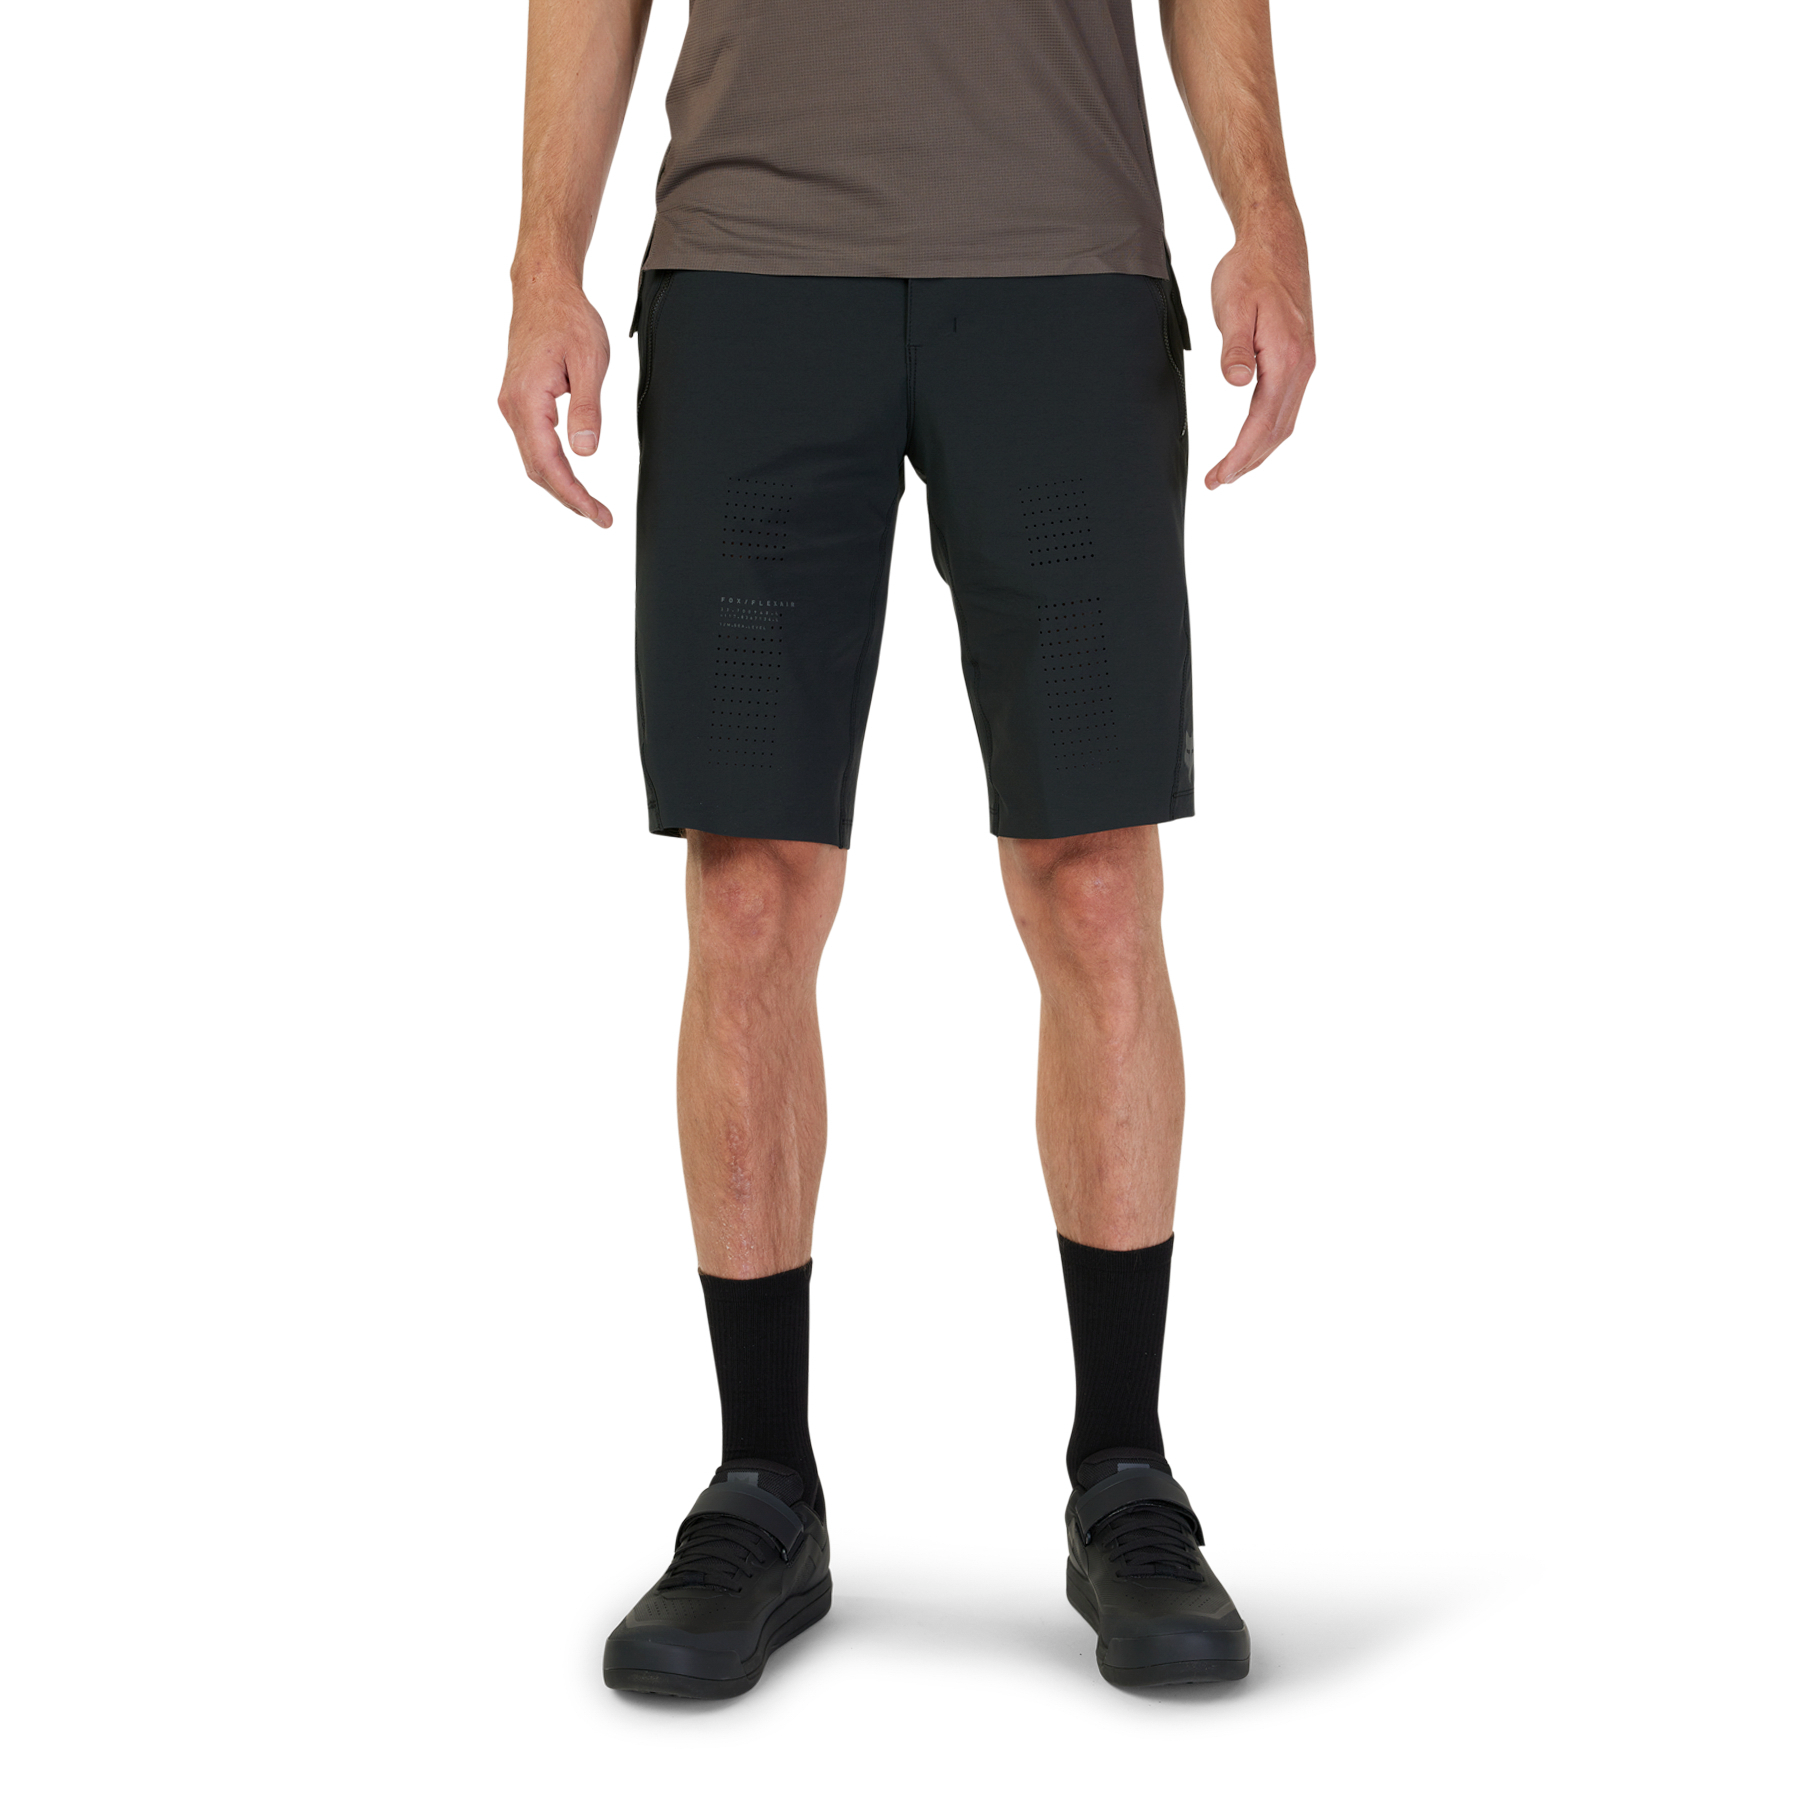 Fox Flexair Shorts With Liner - 2XL-38 - Black - Image 3